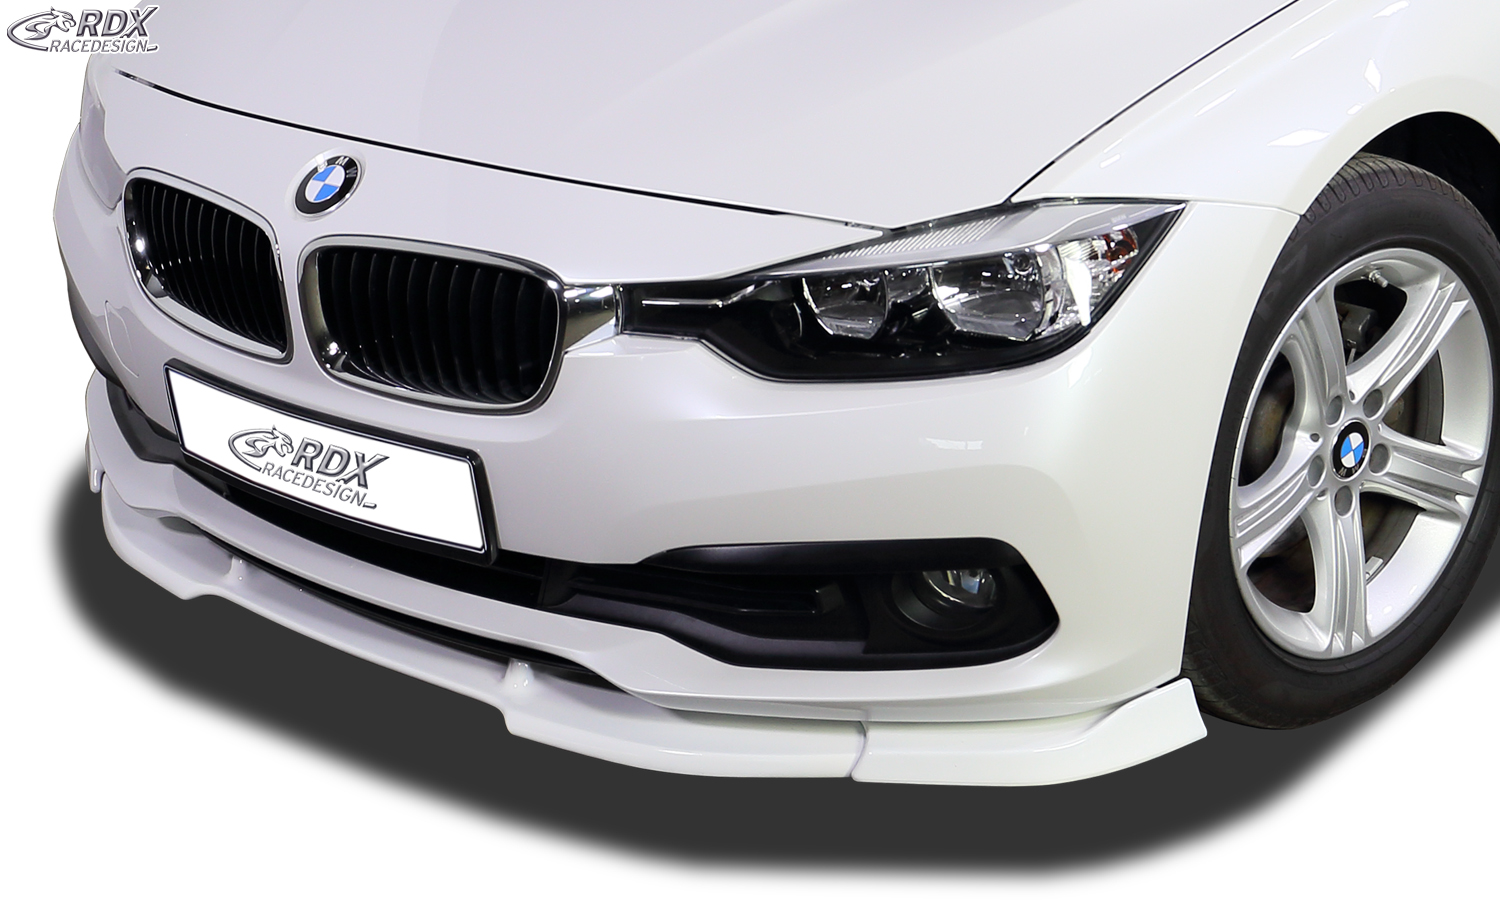 RDX Front Spoiler VARIO-X for BMW 3-series F30 / F31 2015+ Front Lip Splitter